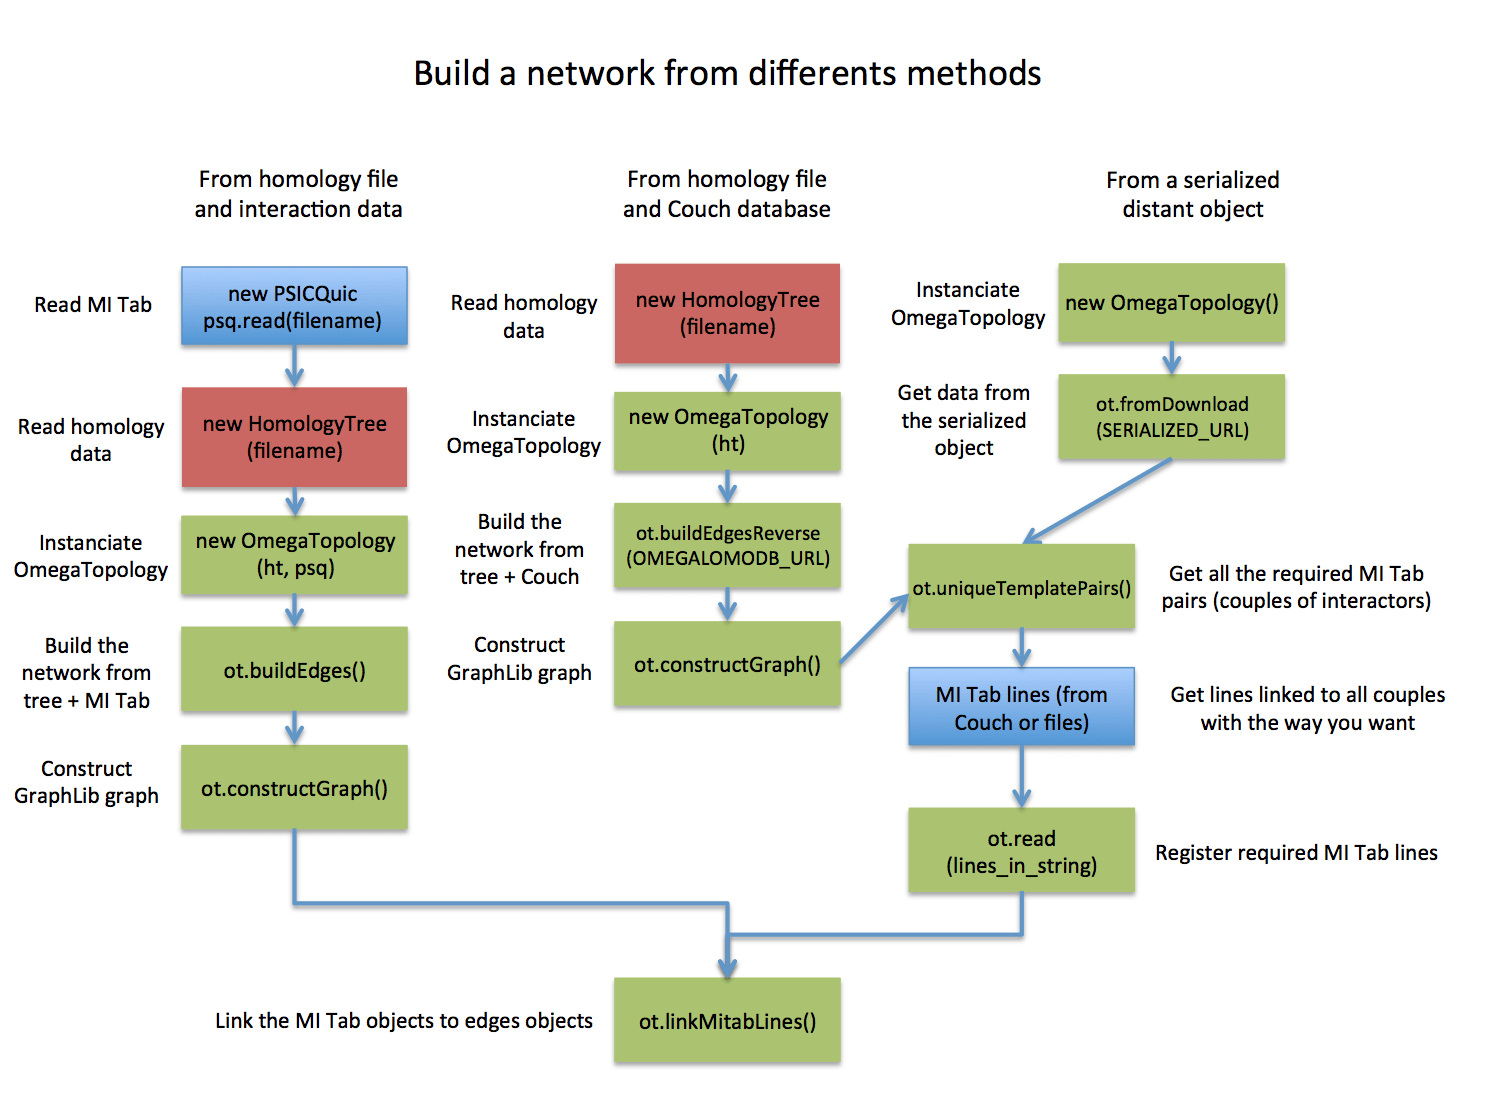 short version of building network